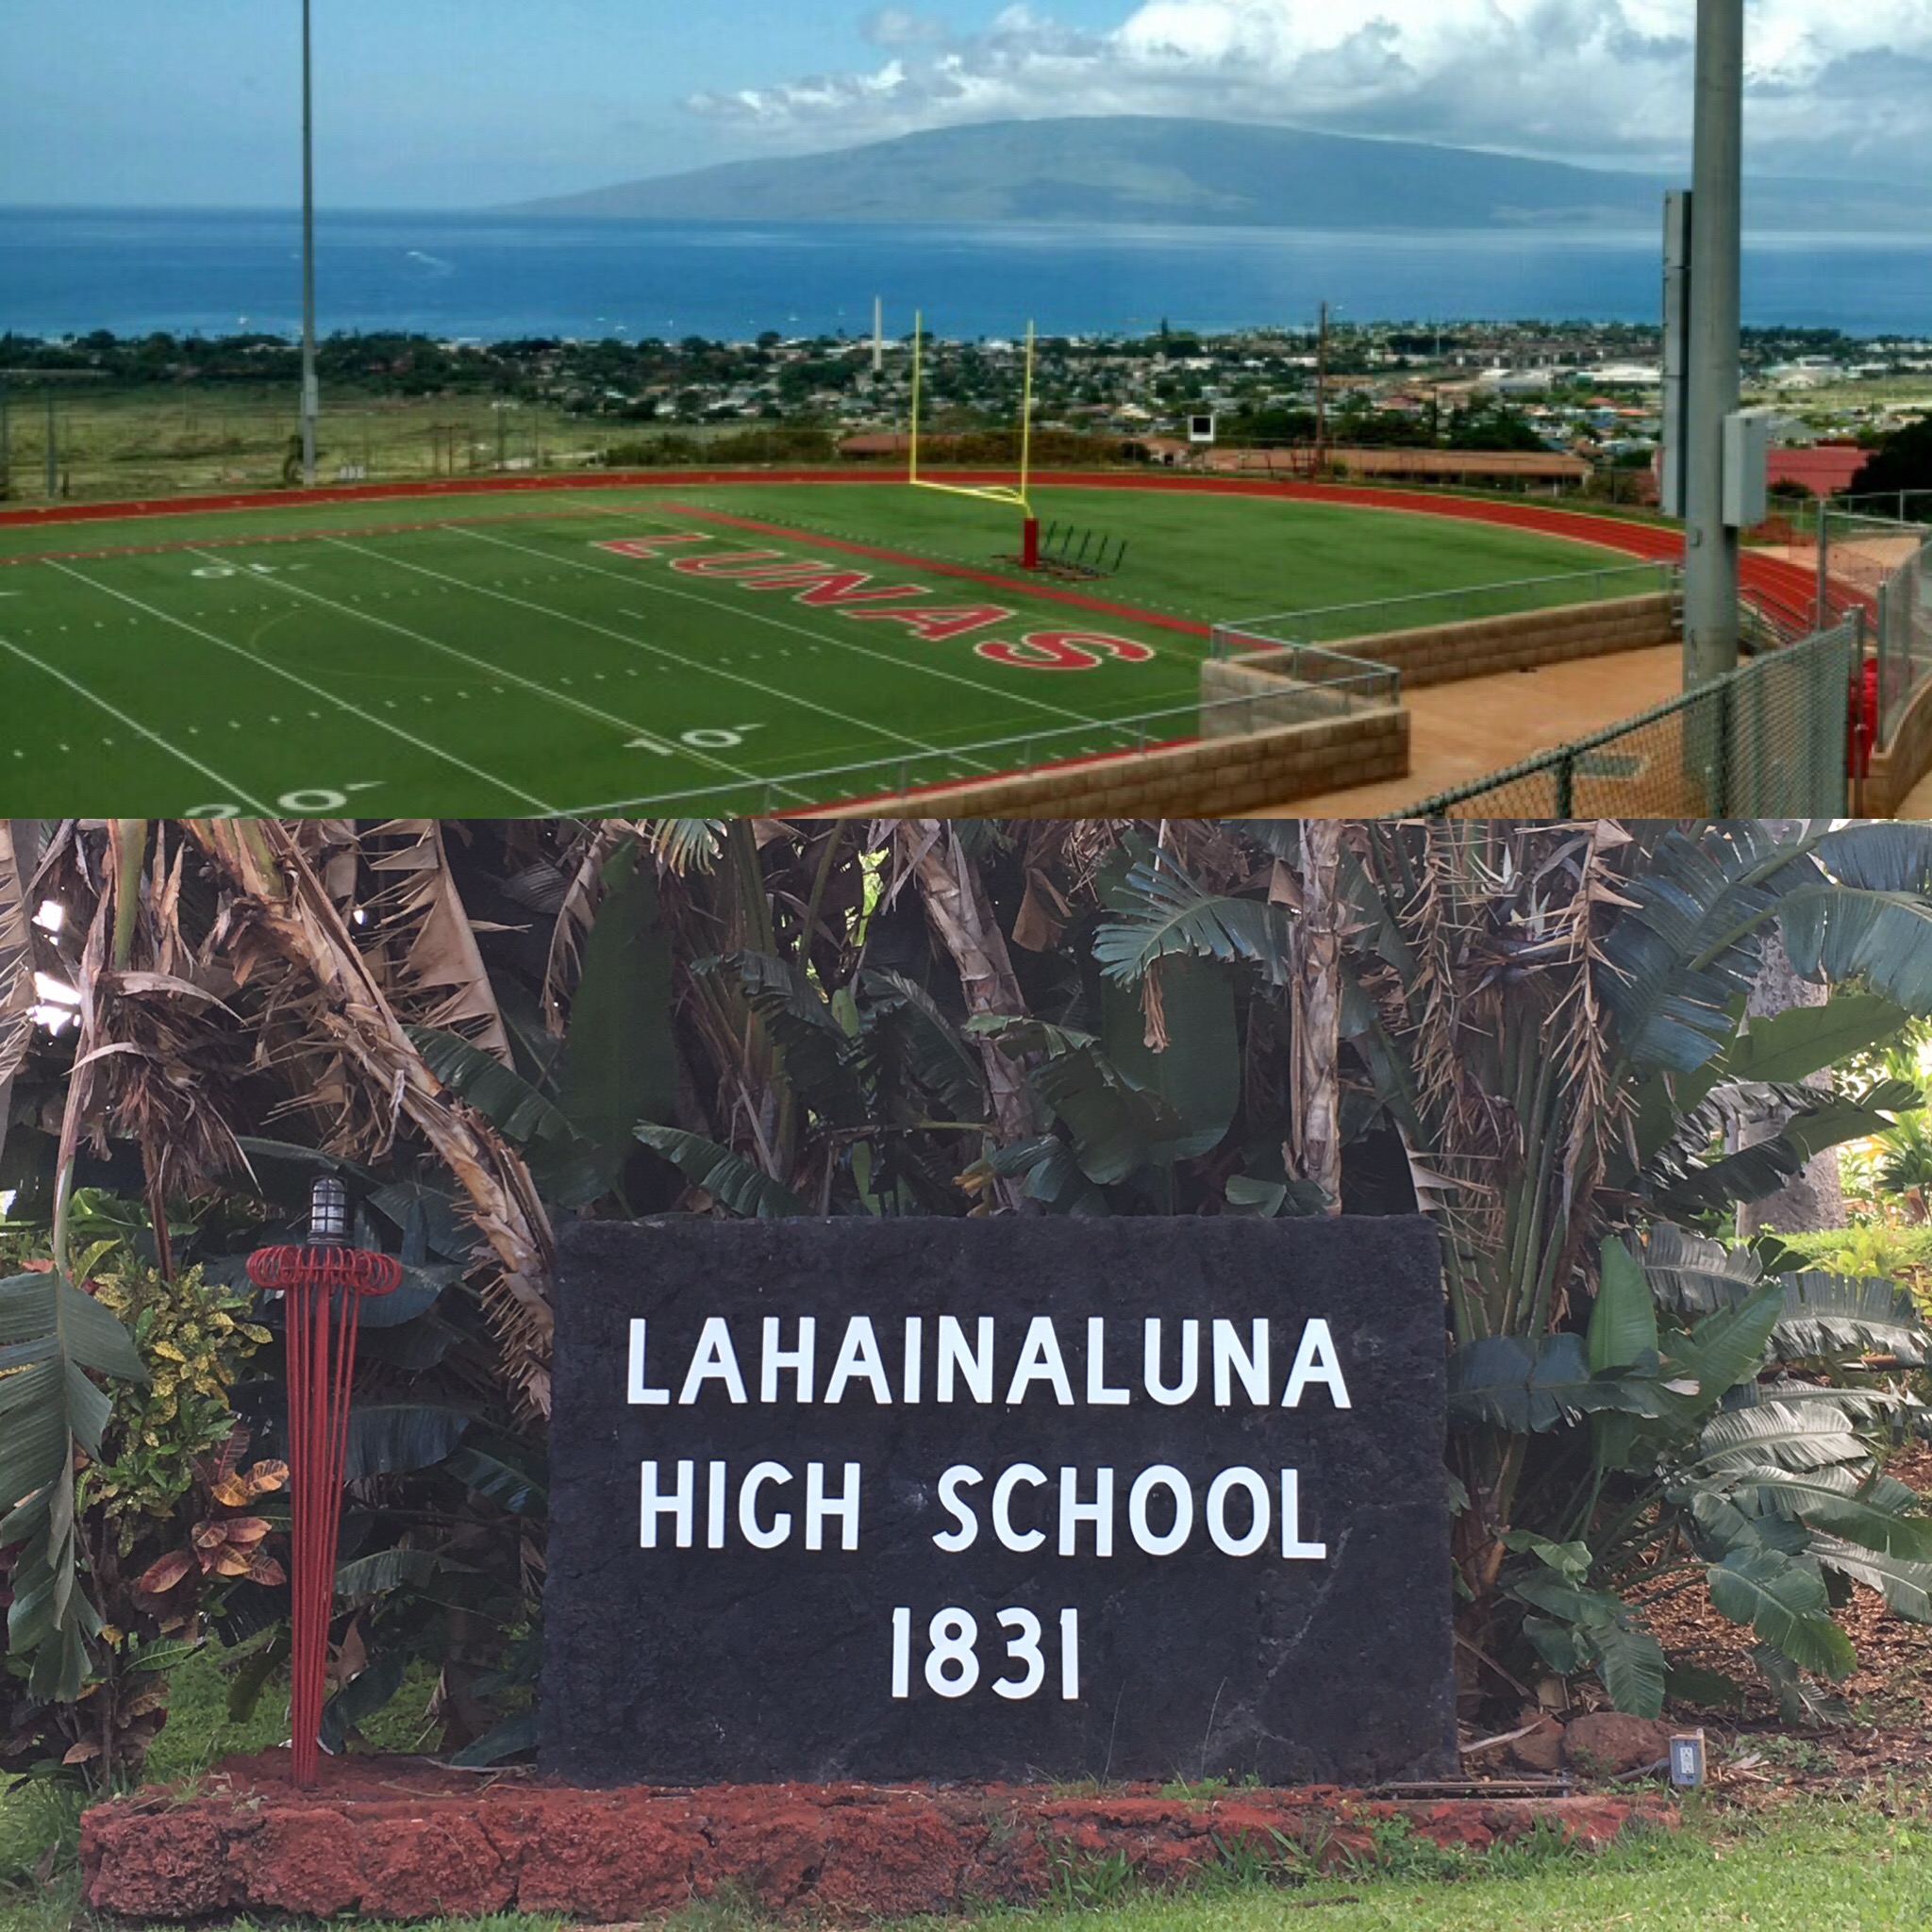 Lahainaluna High School - The Late Show